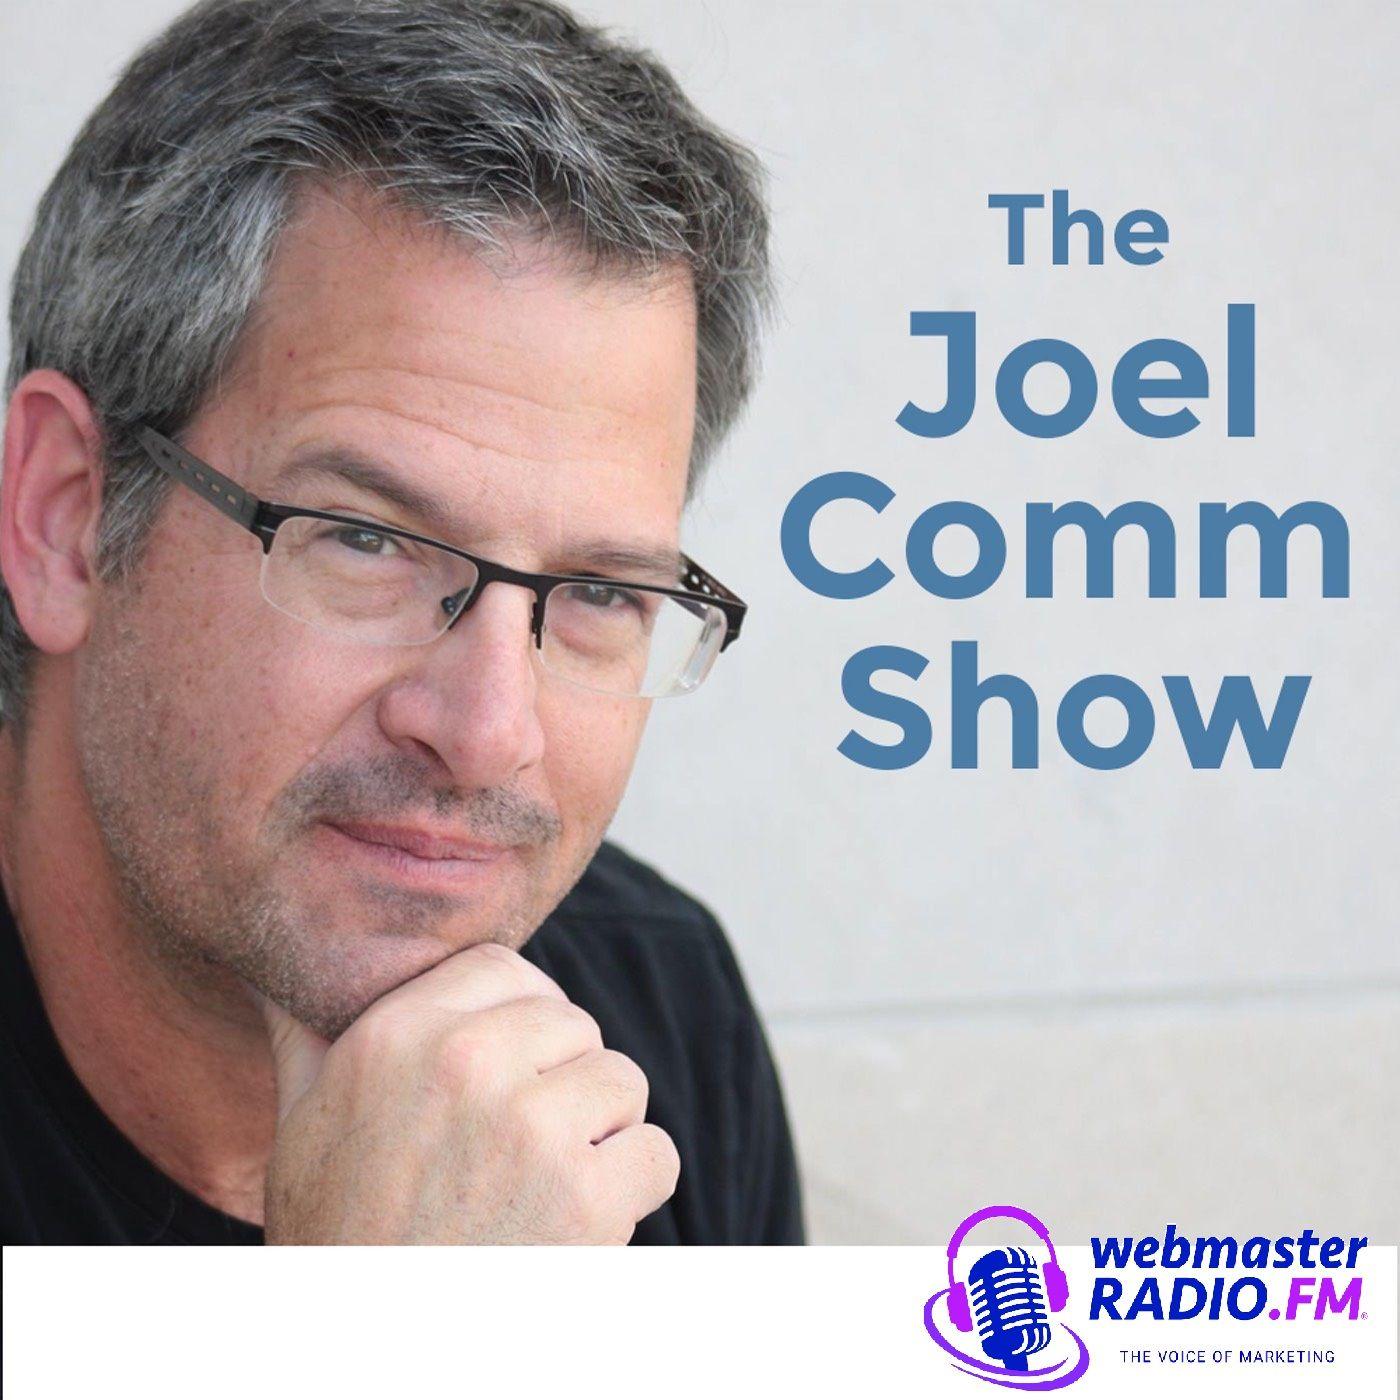 The Joel Comm Show